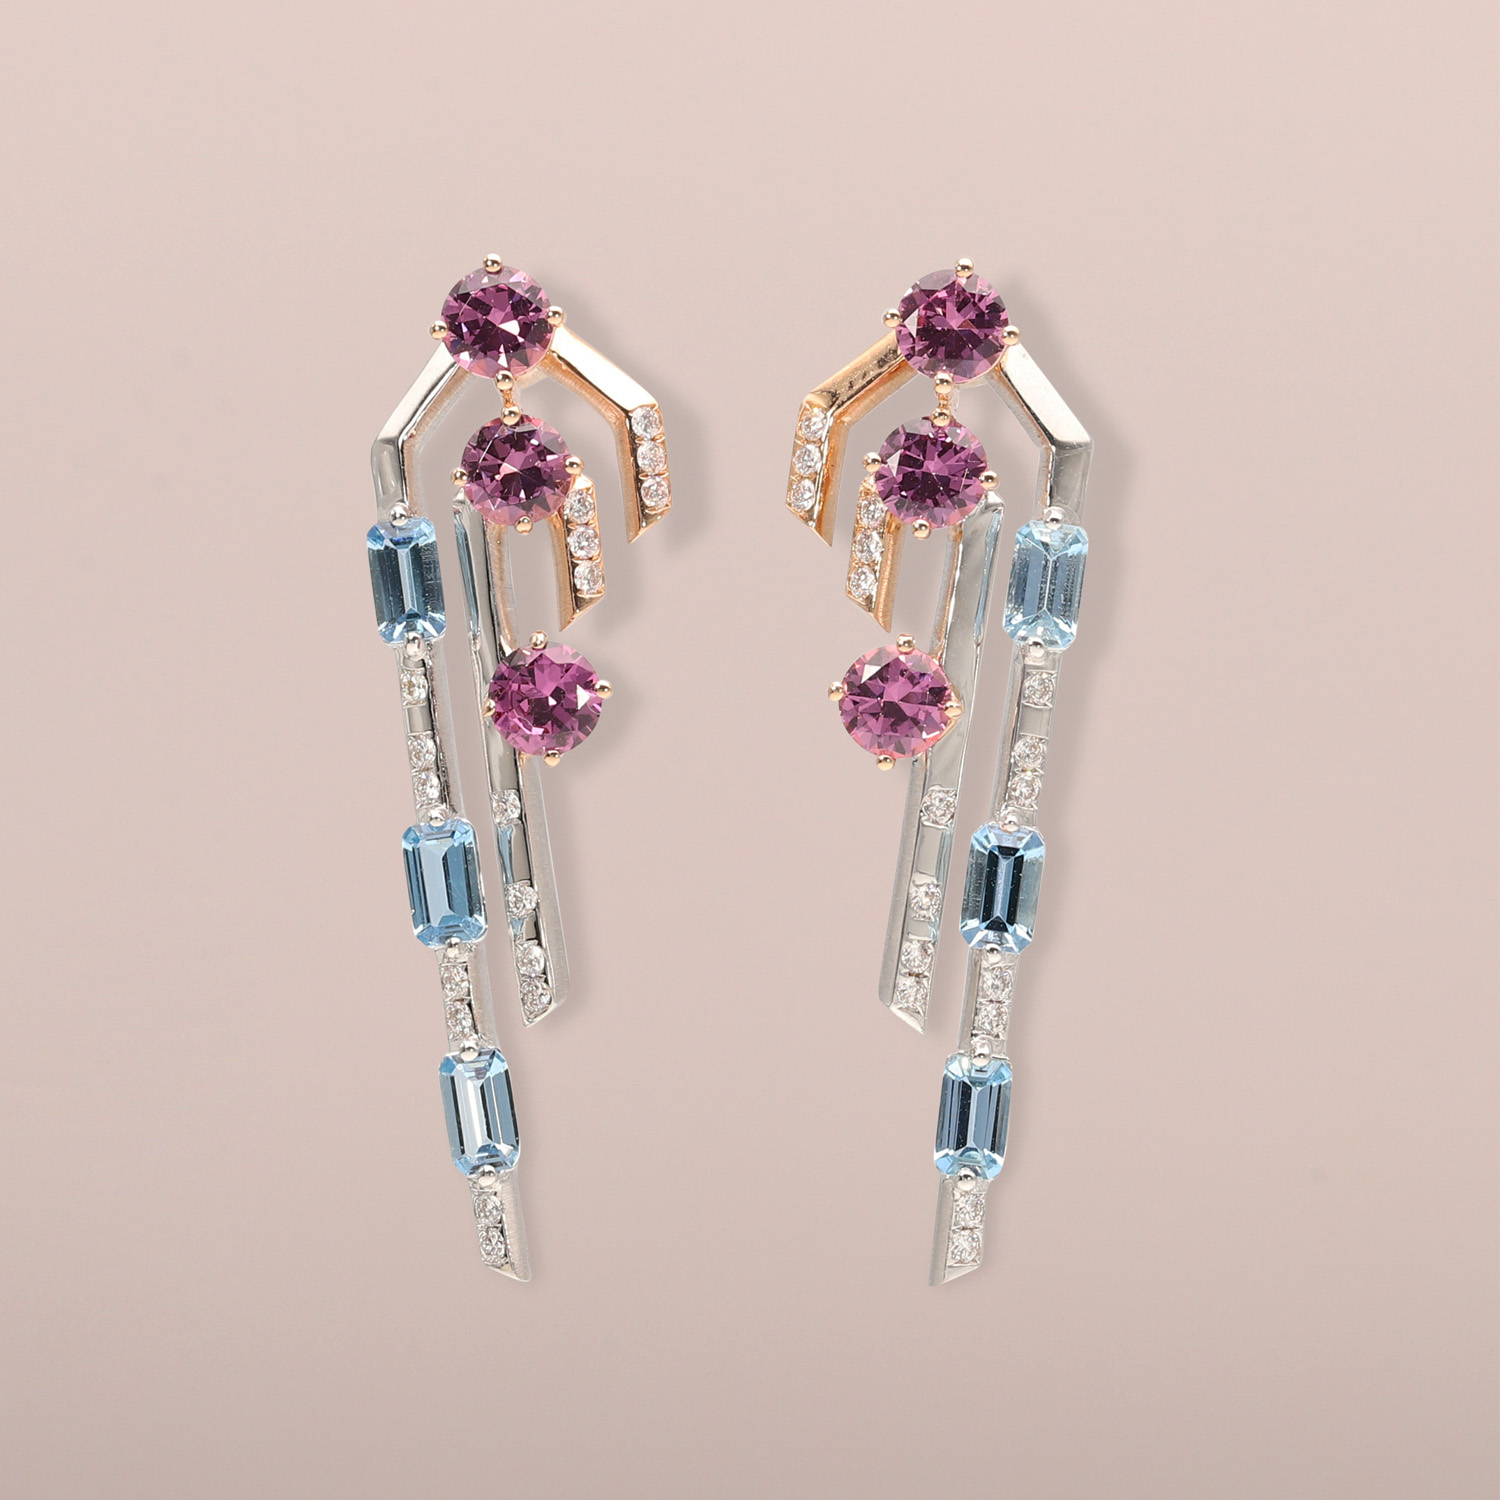 Aquafine Aquamarines, Malaia Garnets and Diamond Earrings